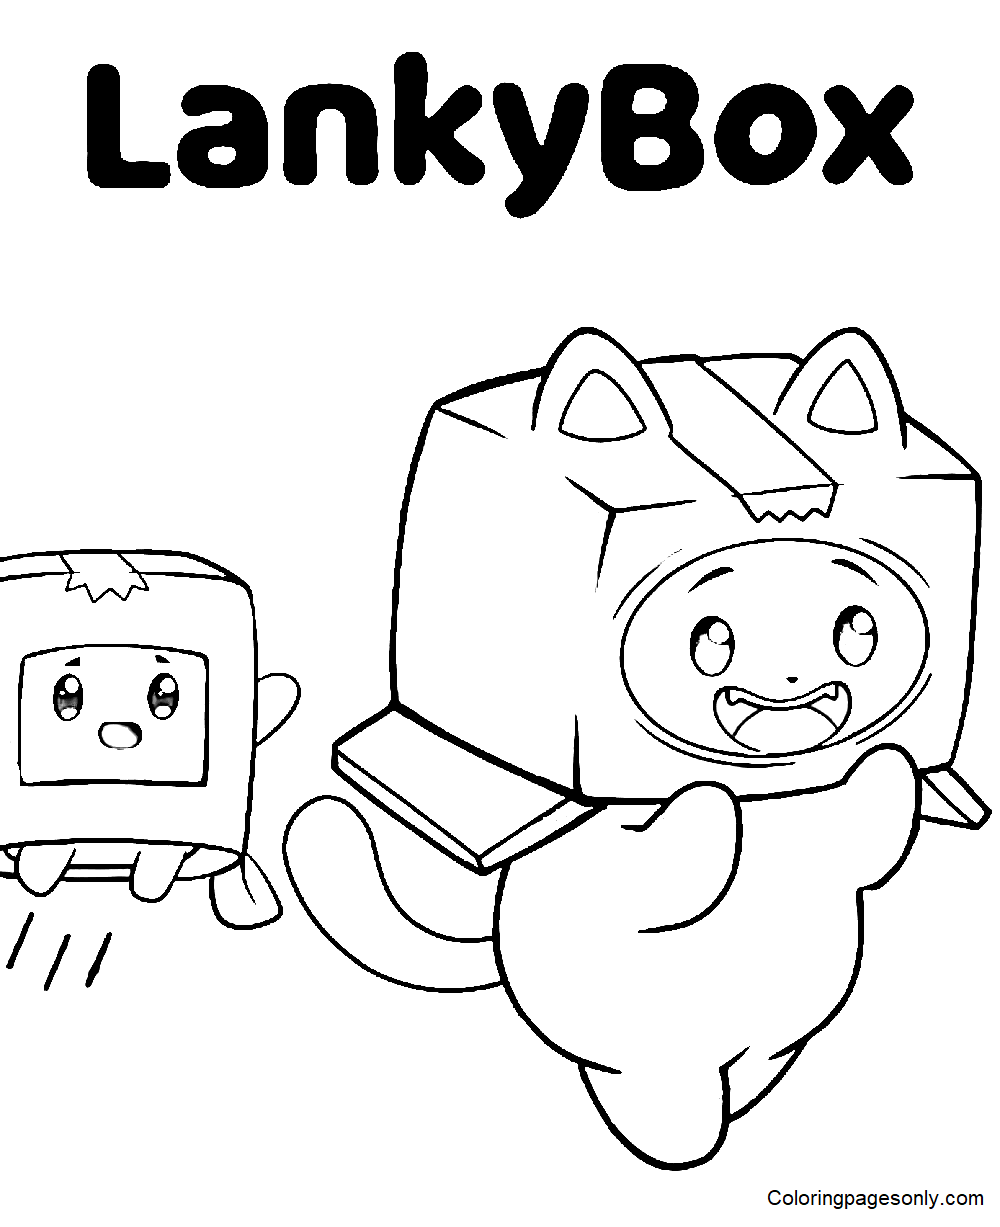 Printable LankyBox Sheets Coloring Page